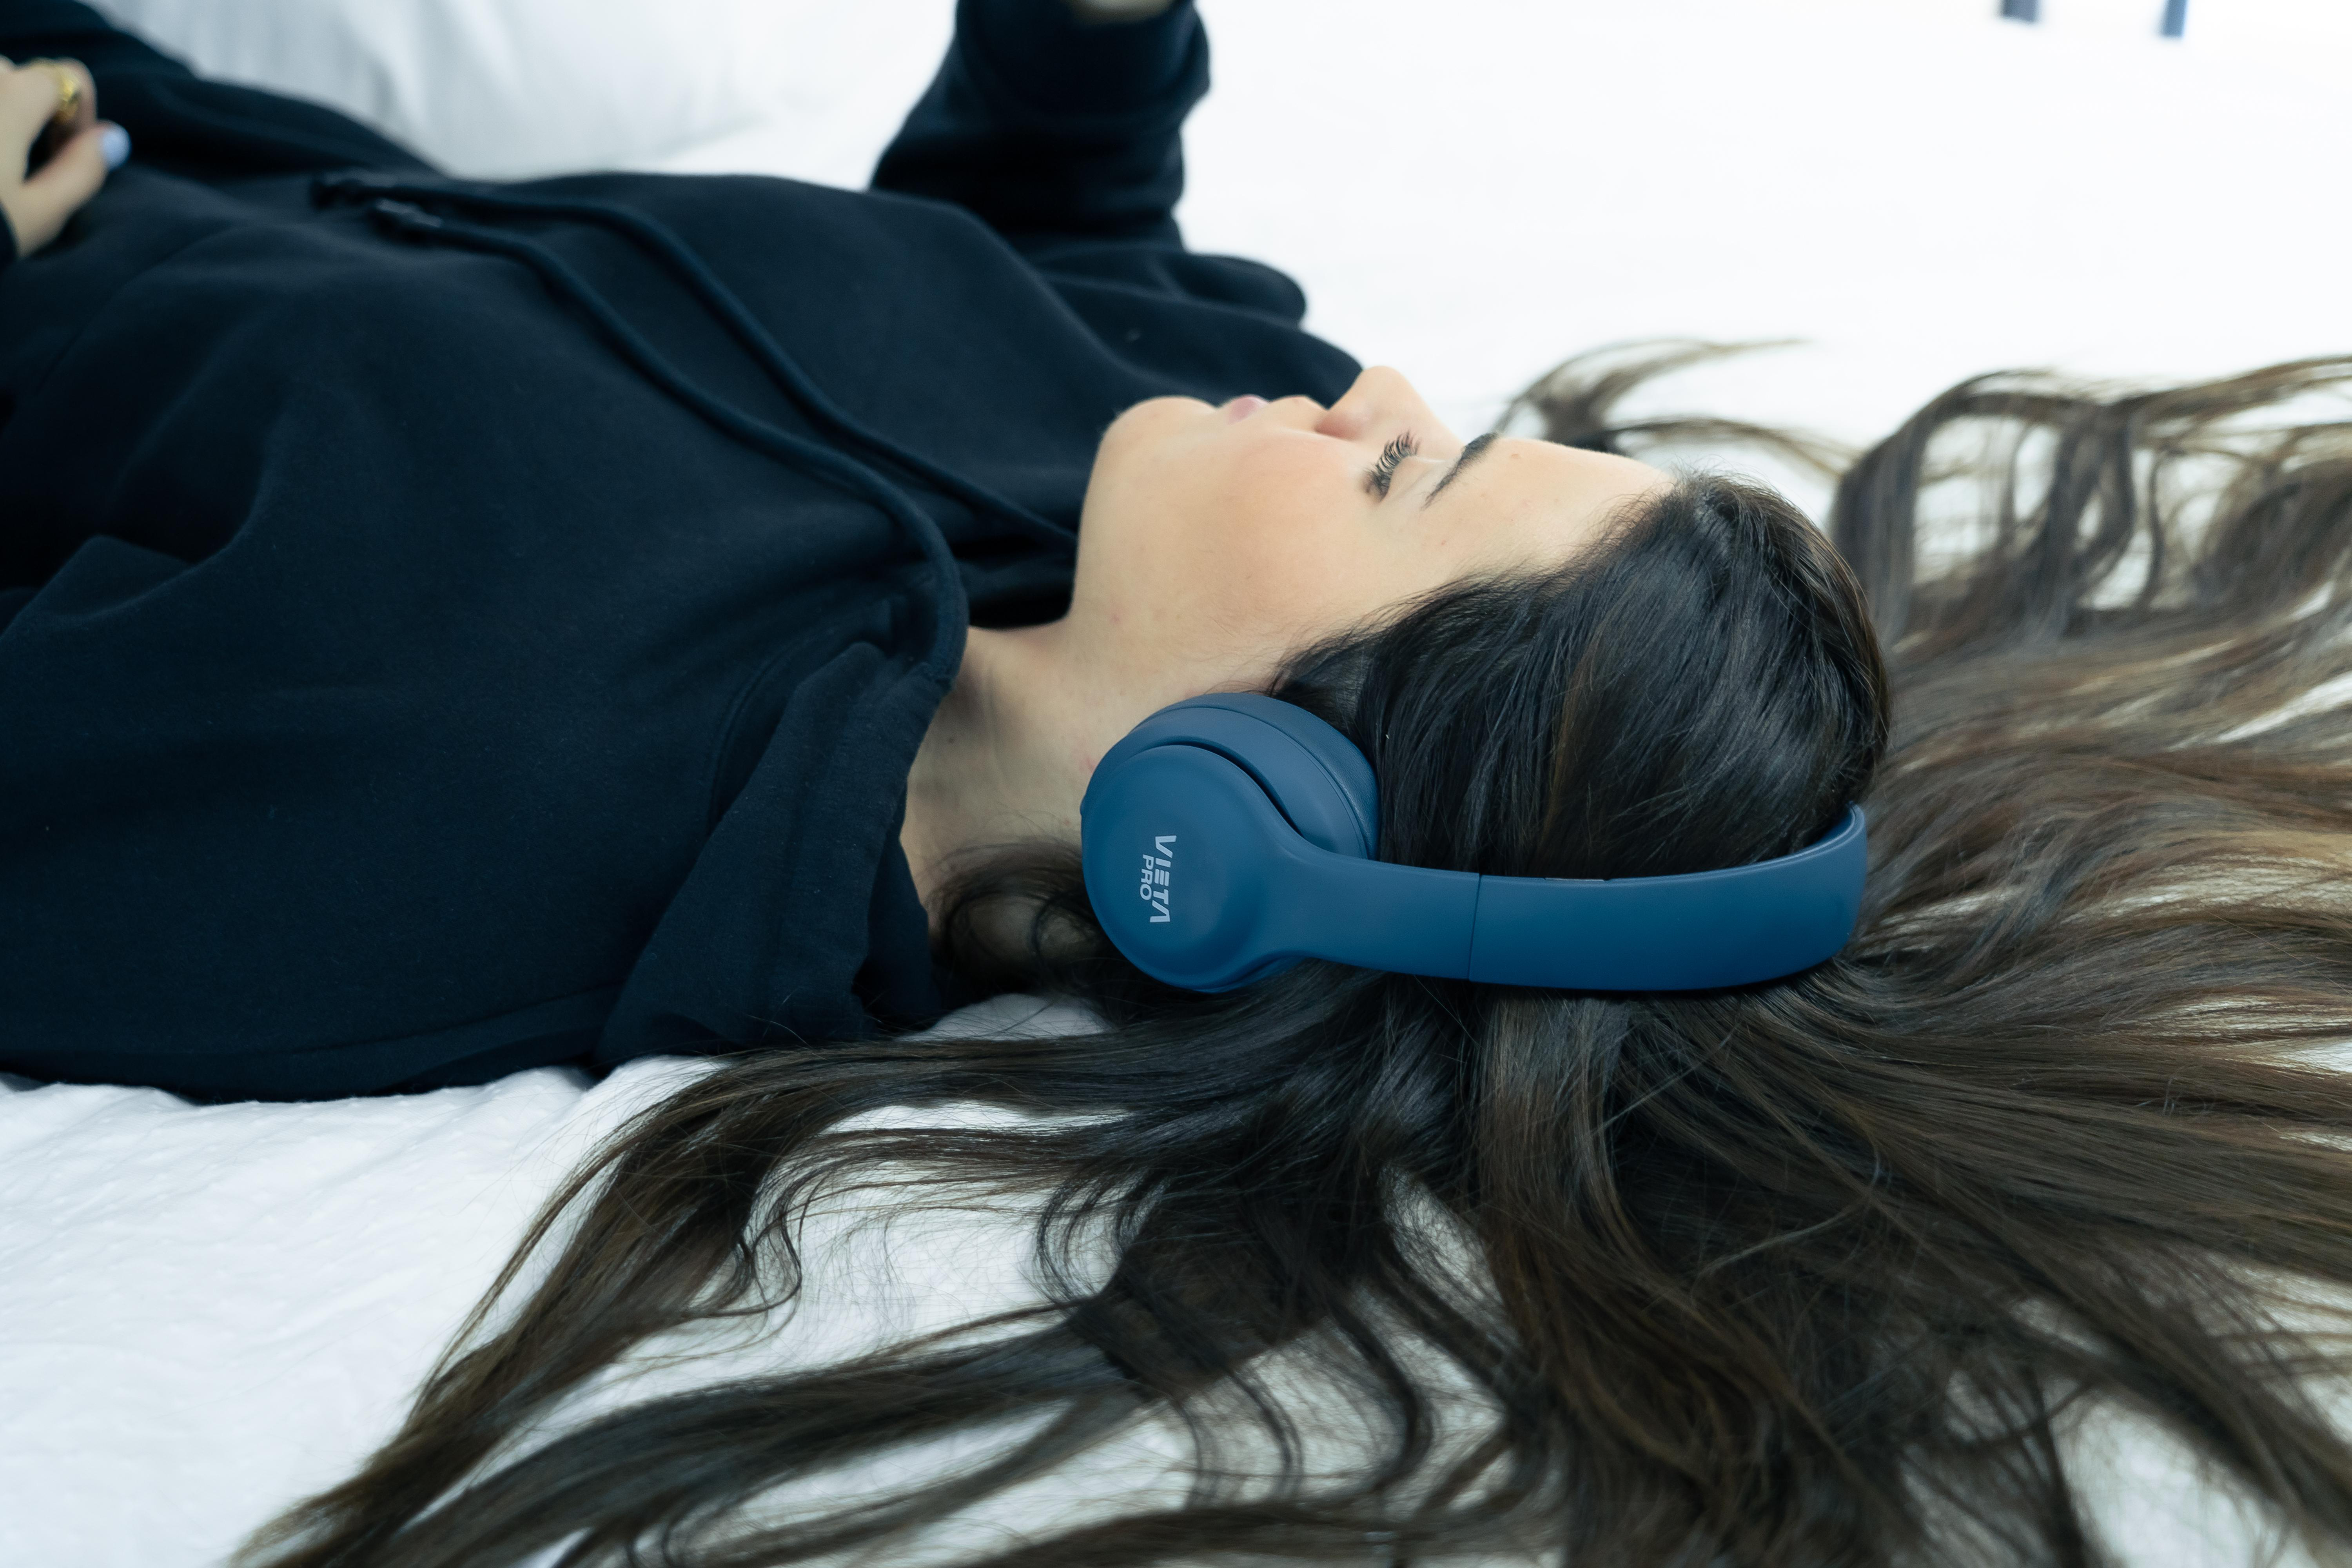 VIETA #SWING, Bluetooth Kopfhörer Blau Over-ear